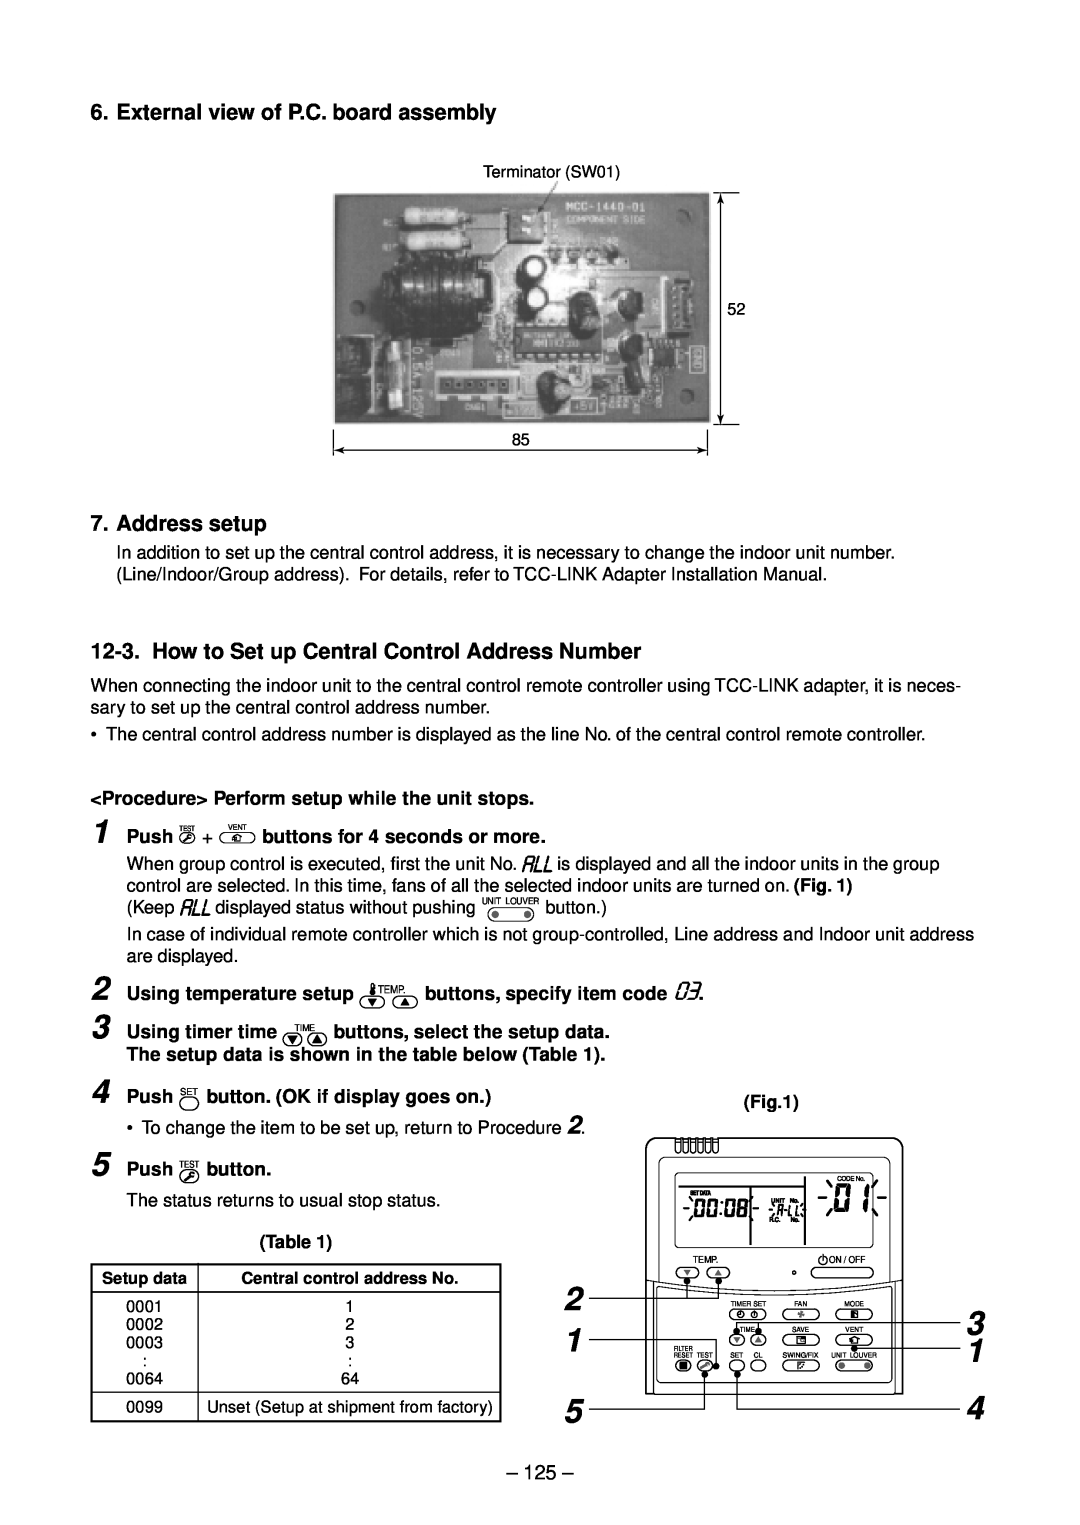 Toshiba RAV-SM1603ATZG-E 1 2 3 4, 2 1 5, 3 1 4, External view of P.C. board assembly, Address setup, 125, Using timer time 